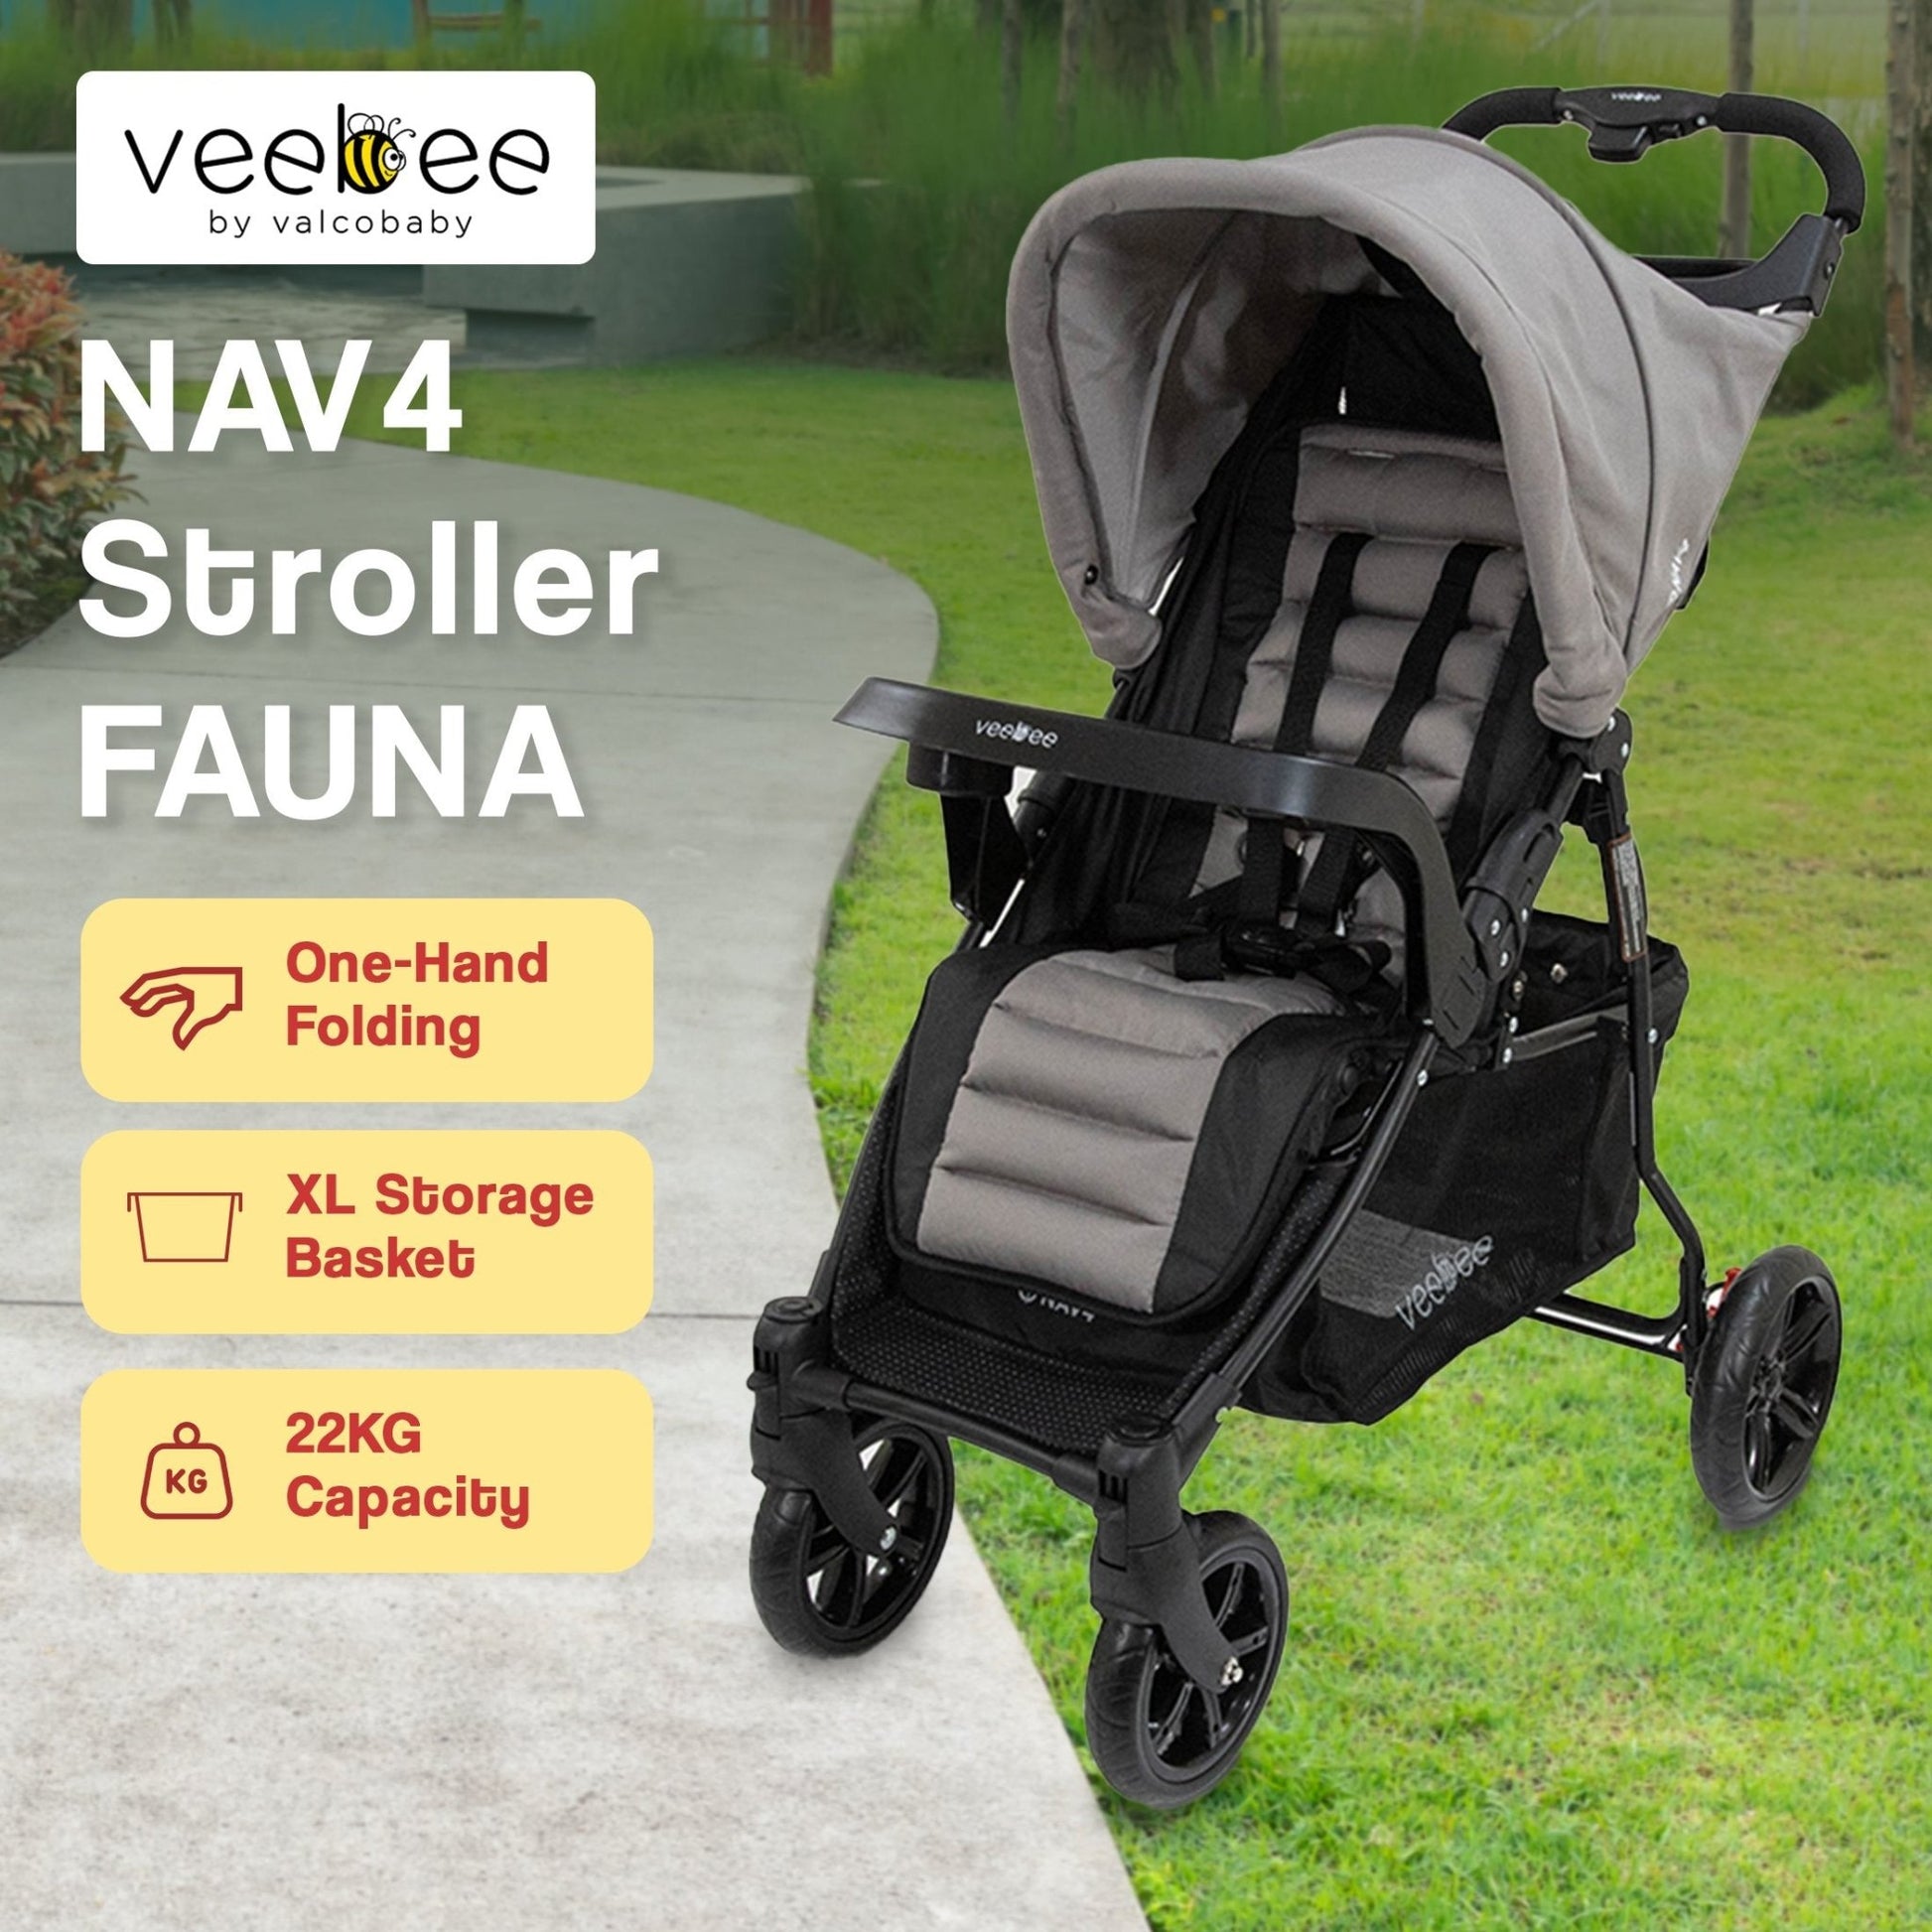 Veebee Nav 4 Stroller - Fauna - Little Kids Business